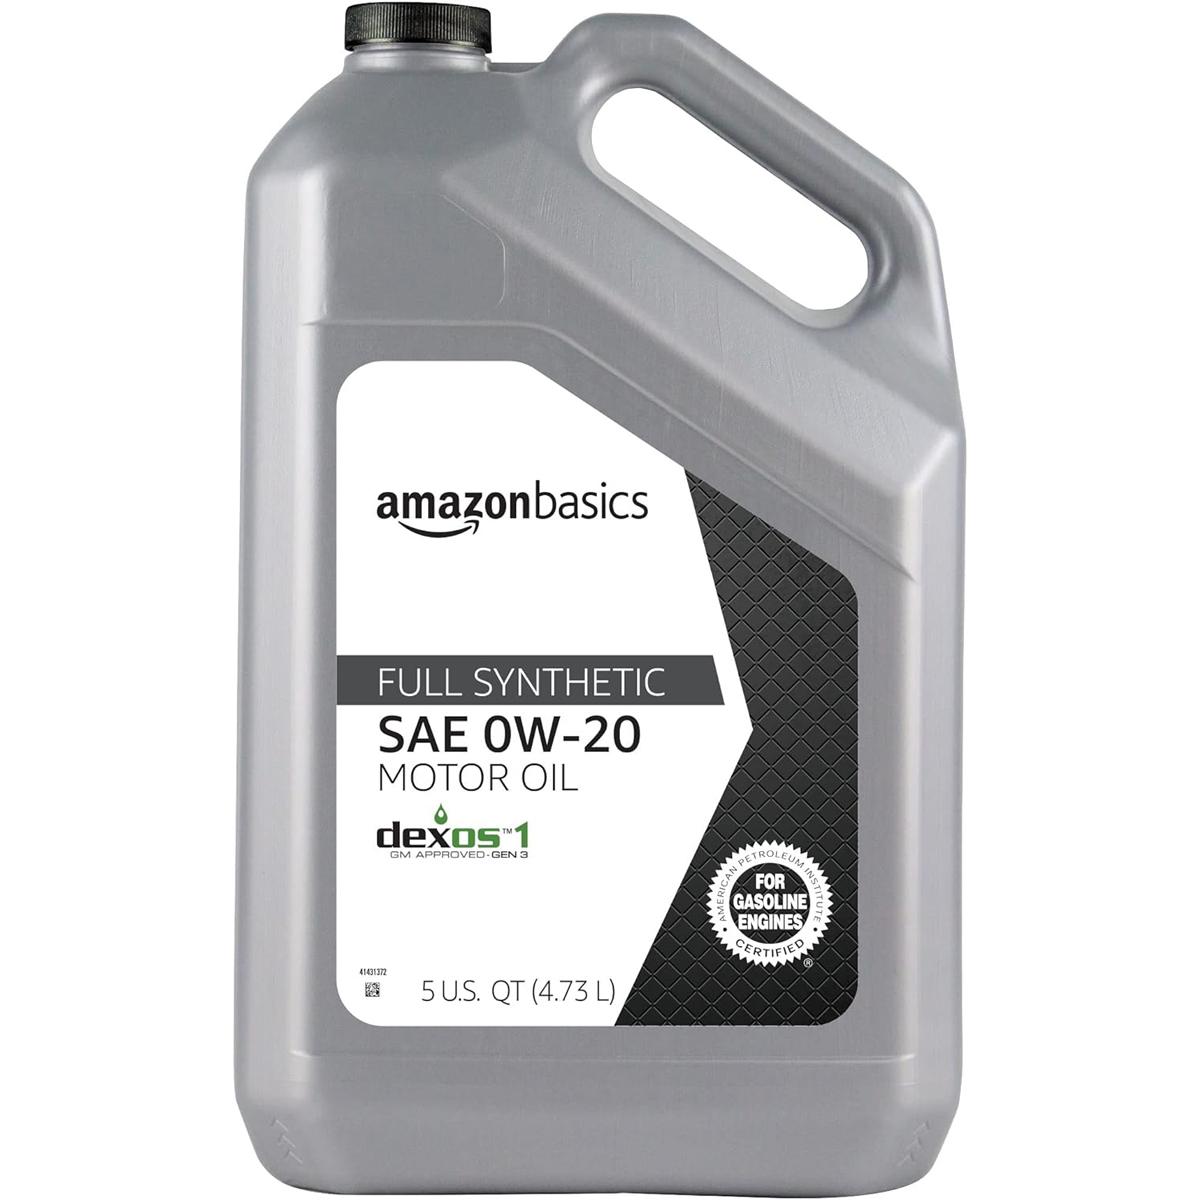 Amazon Basics 5Q 0W-20 Full Synthetic Motor Oil for $16.93 Shipped